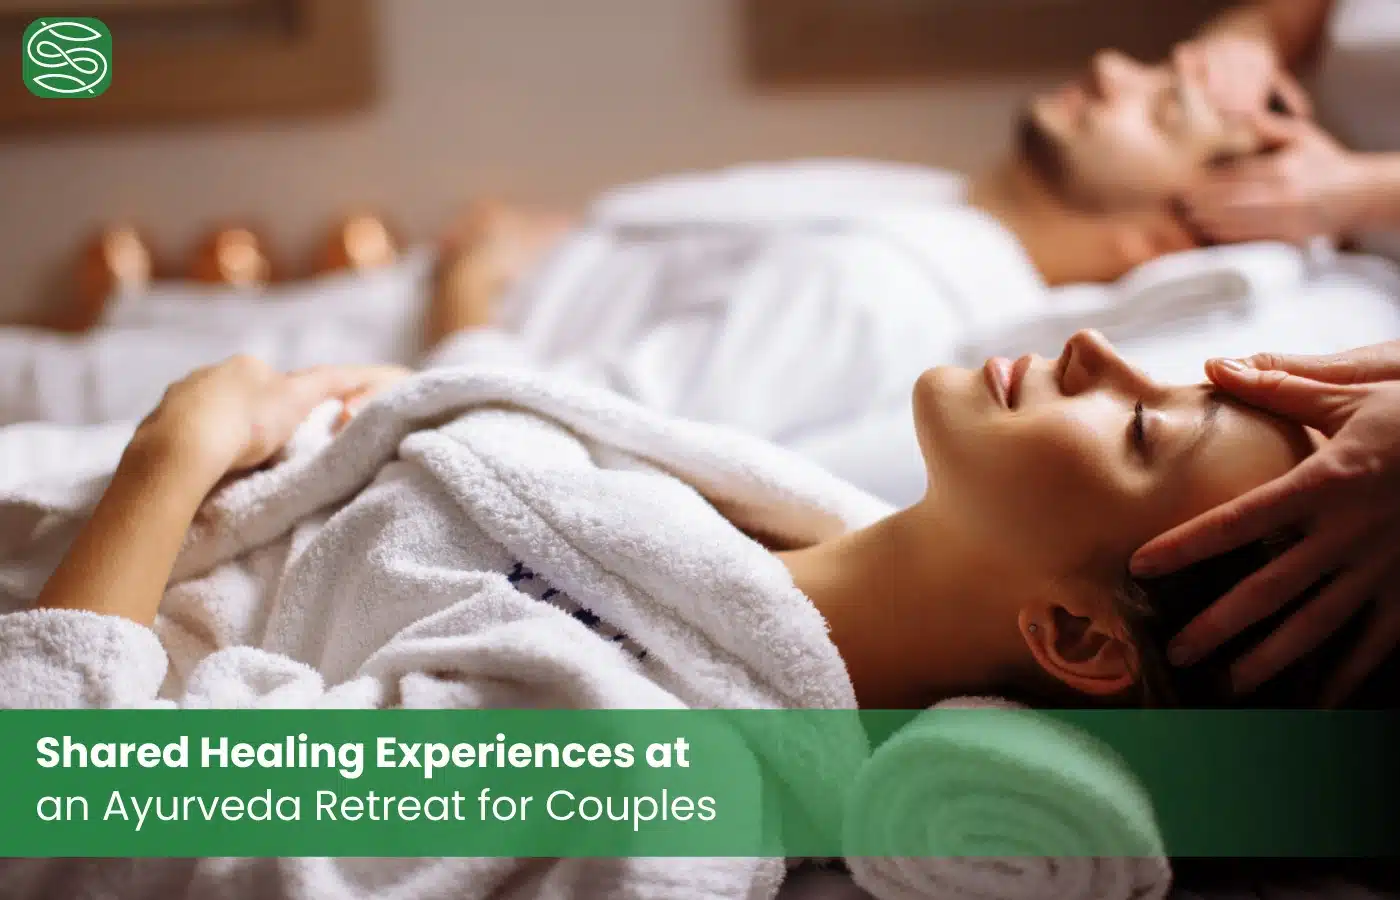 Ayurveda retreat for couples